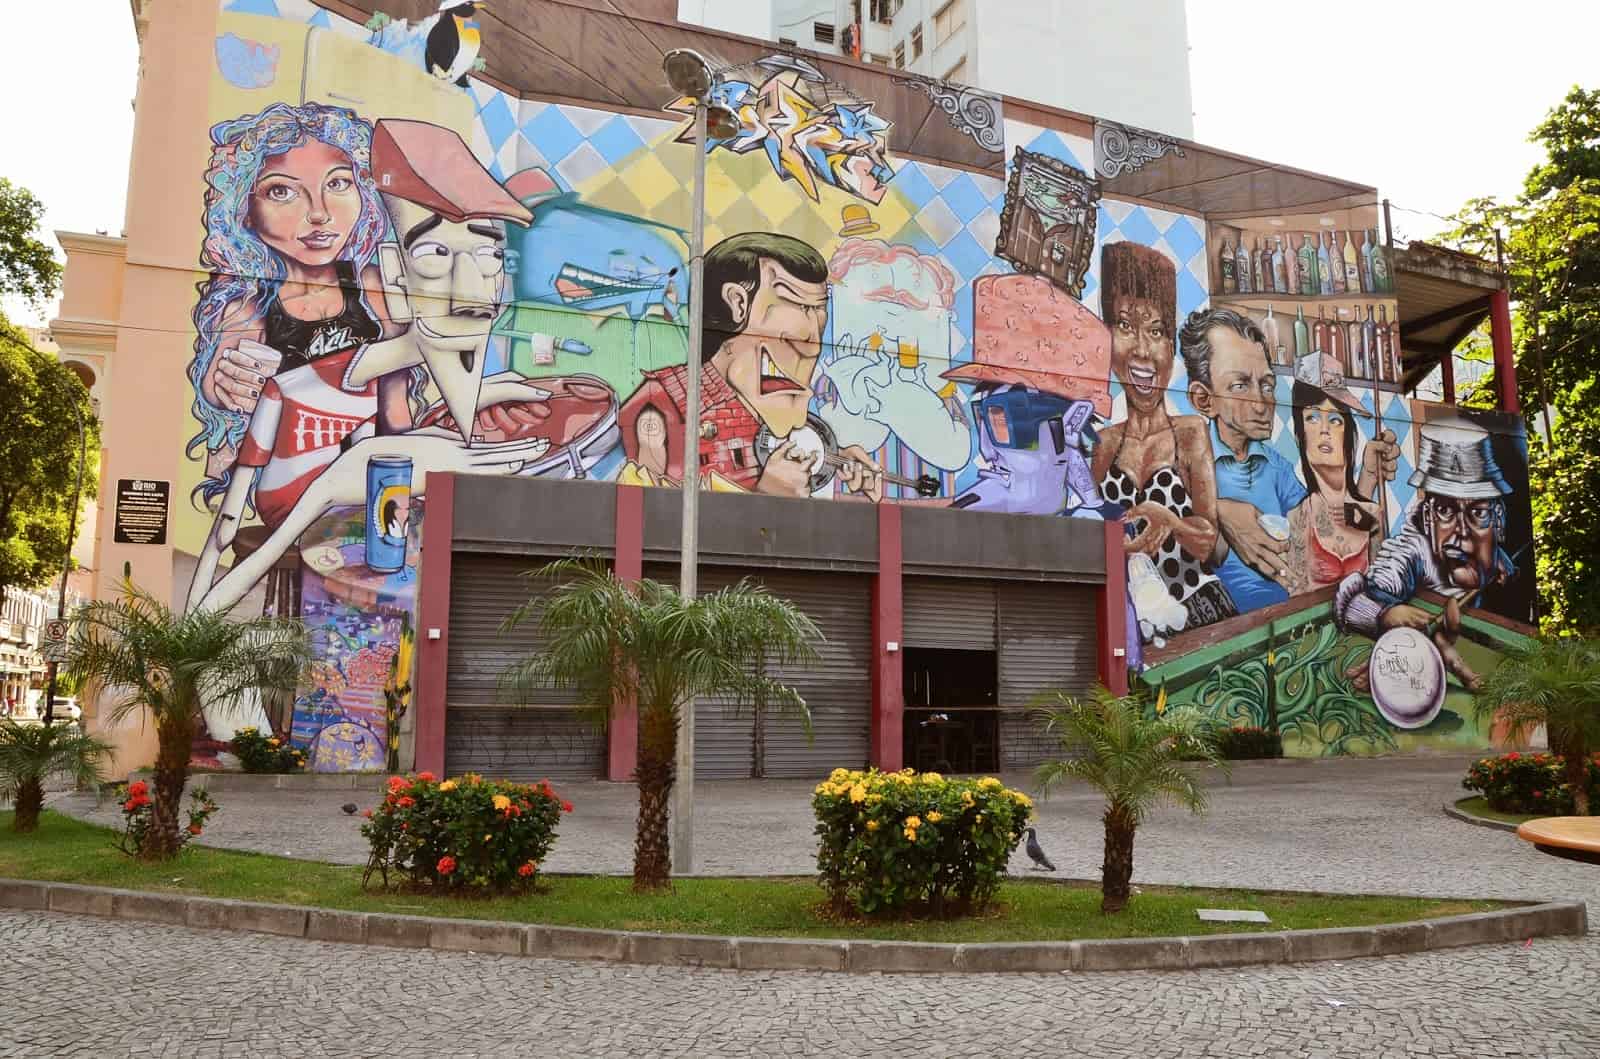 A mural dedicated to Lapa nightlife, Rio de Janeiro, Brazil